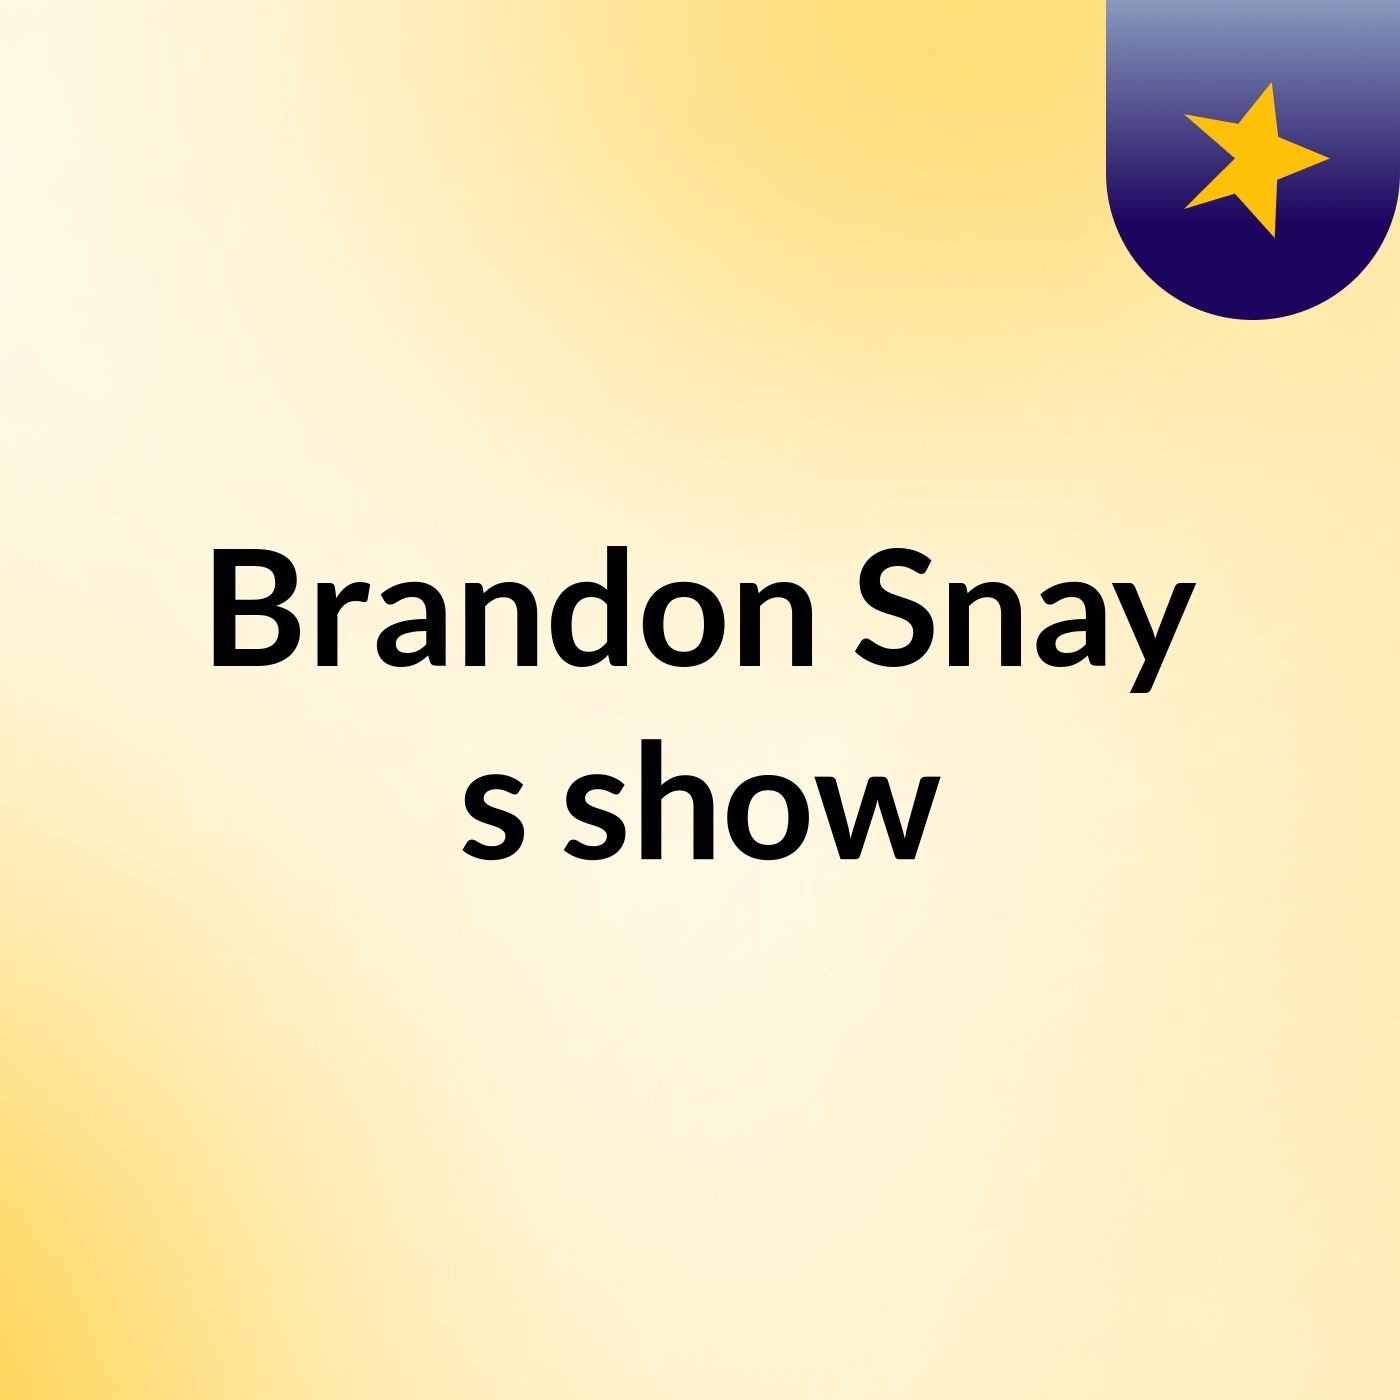 Brandon Snay's show